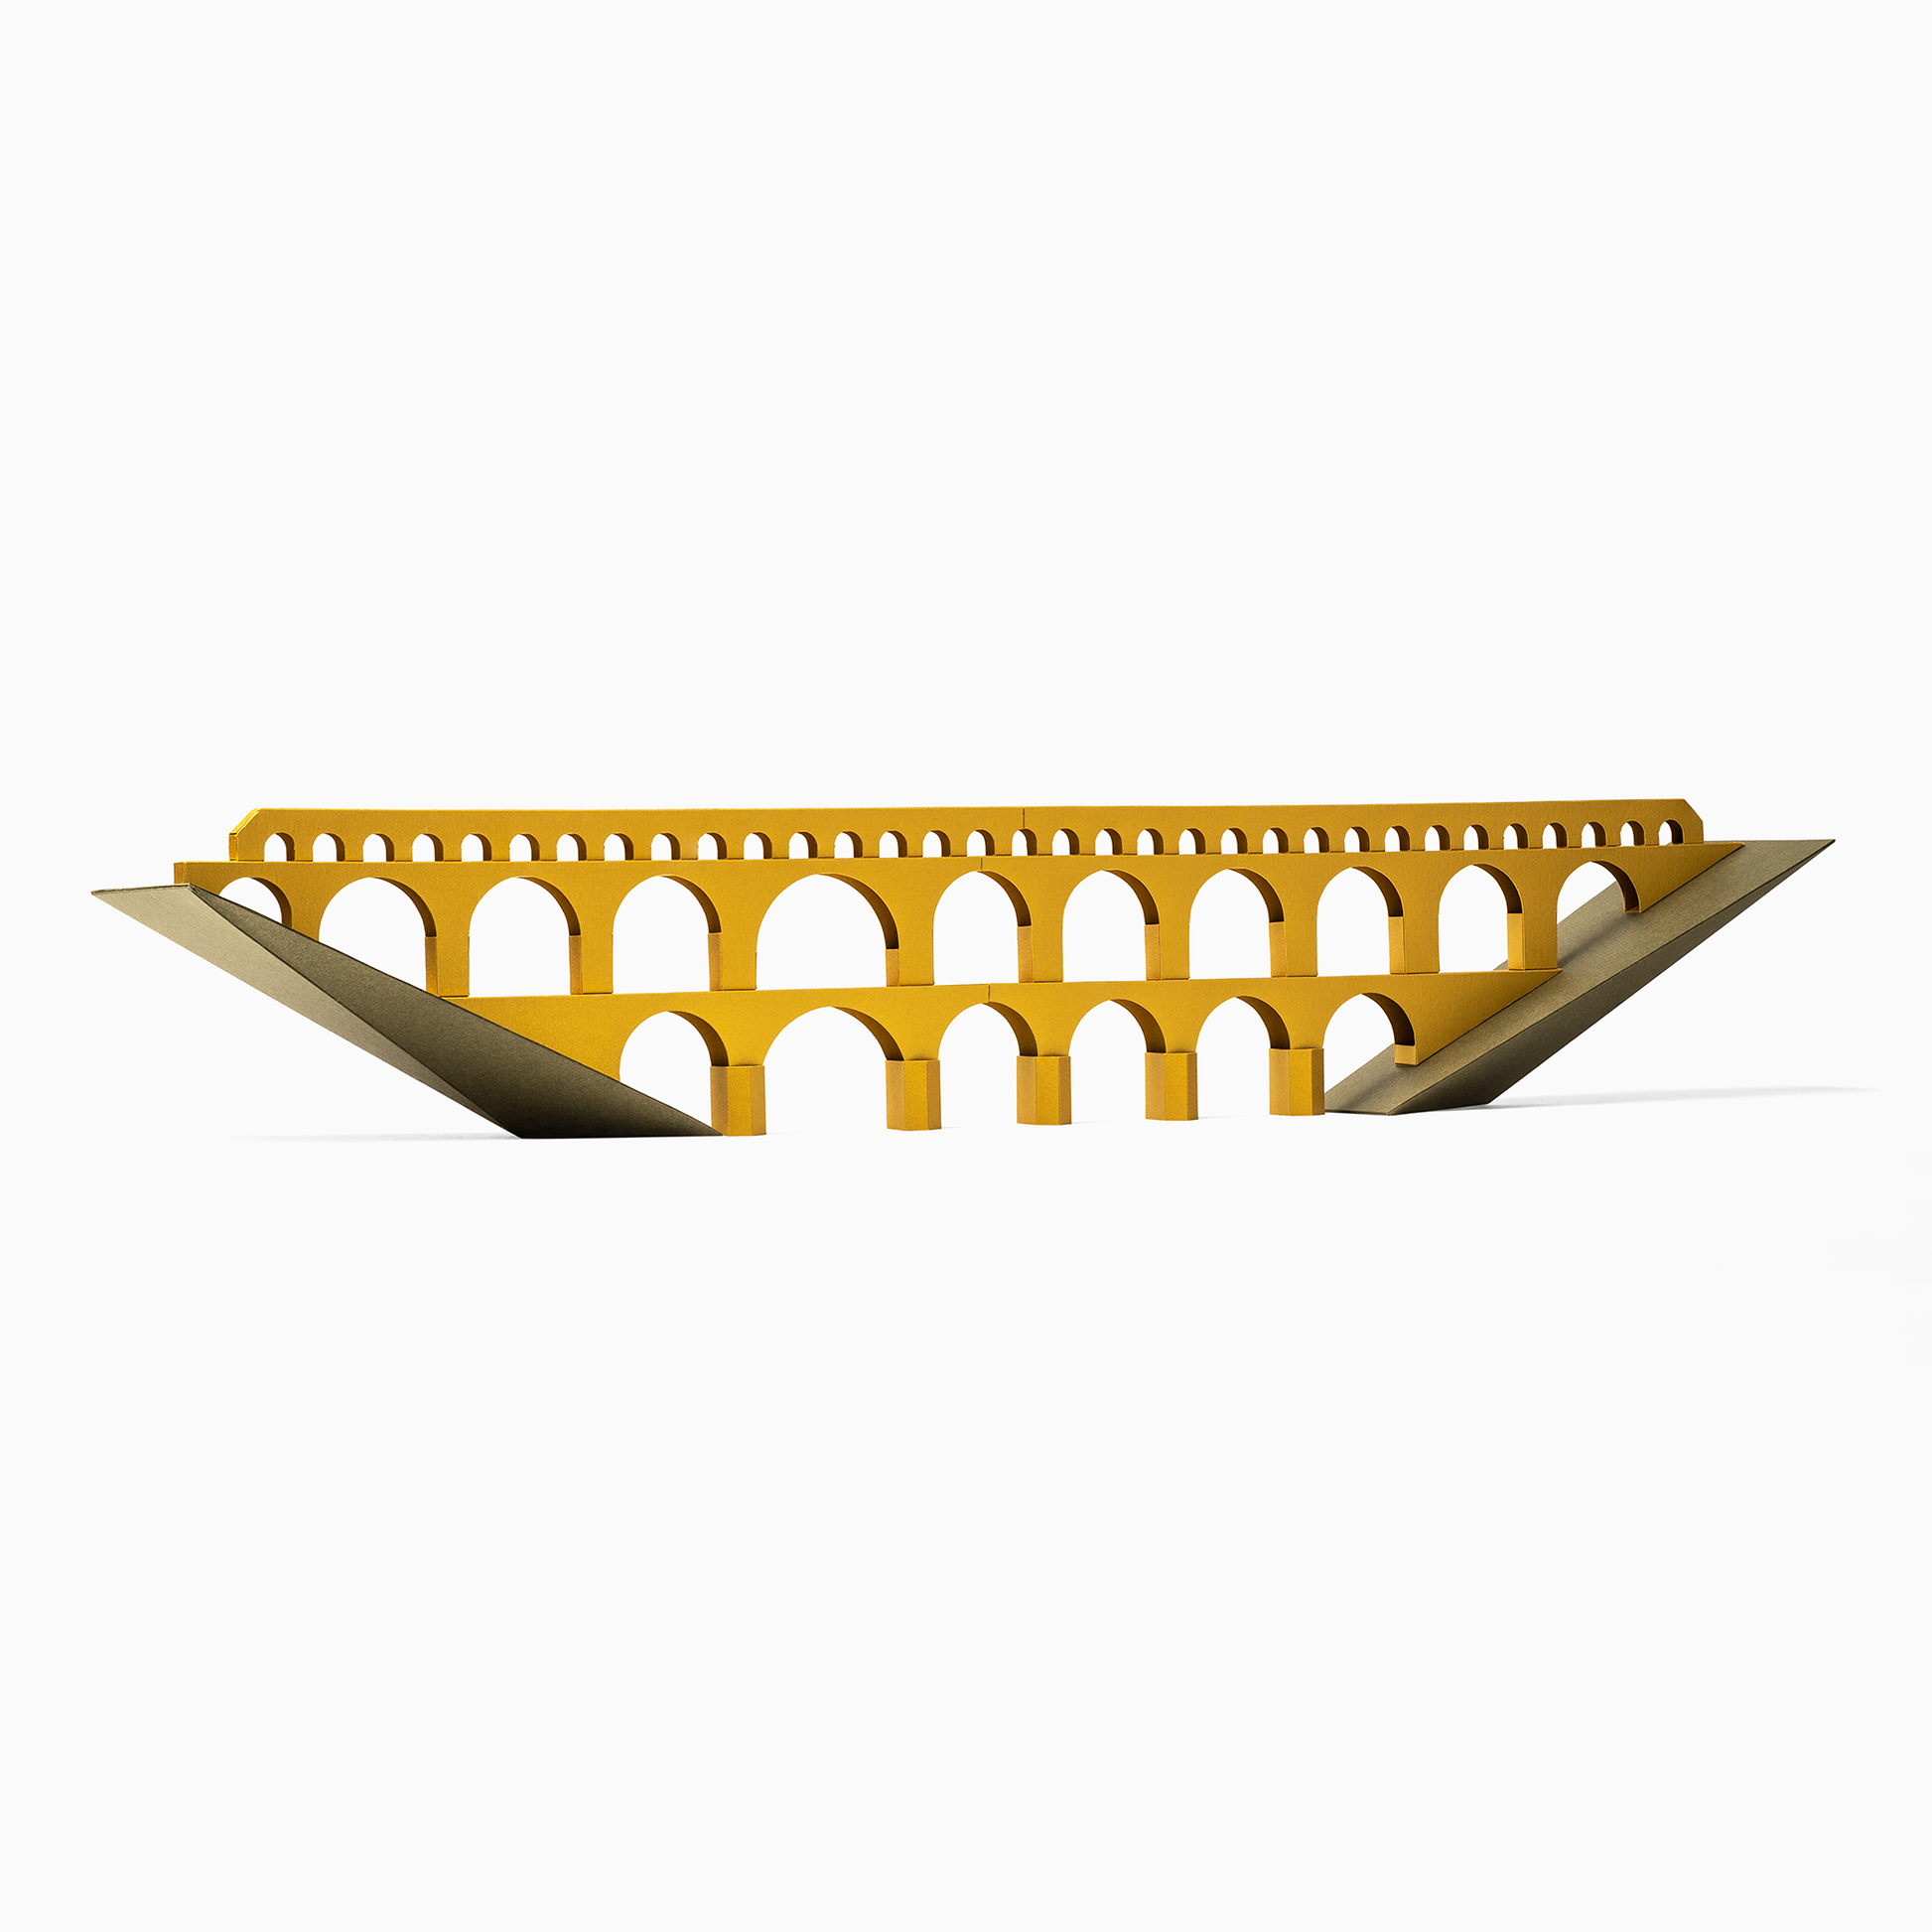 Pont du Gard Paper Model by PaperLandmarks